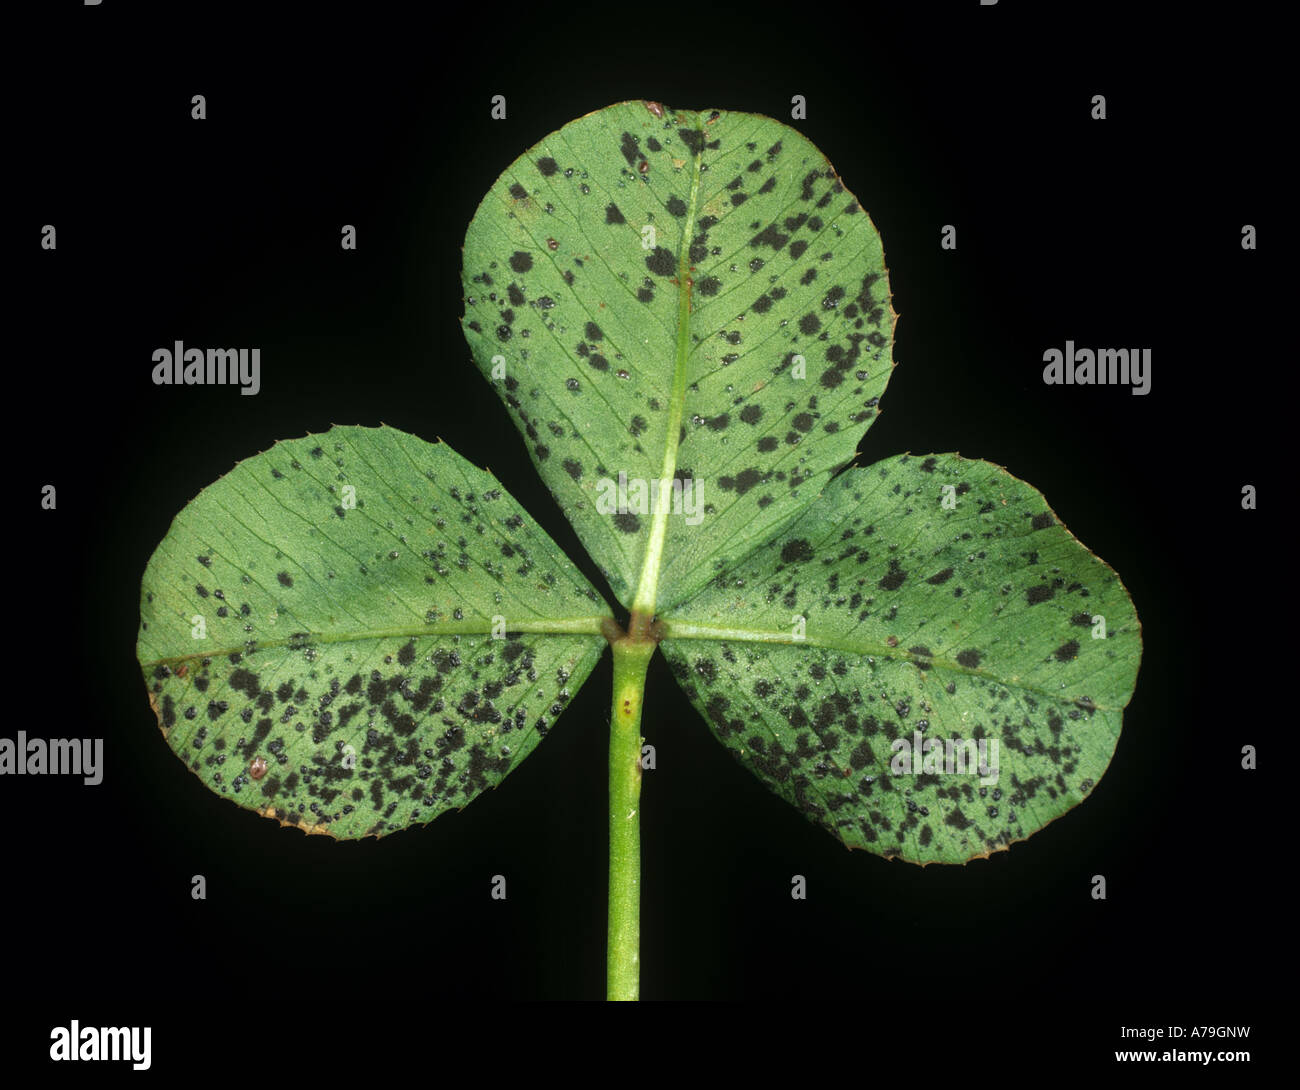 Black blotch Cymadothea trifolii dark discreet spots on white clover leaf surface Stock Photo